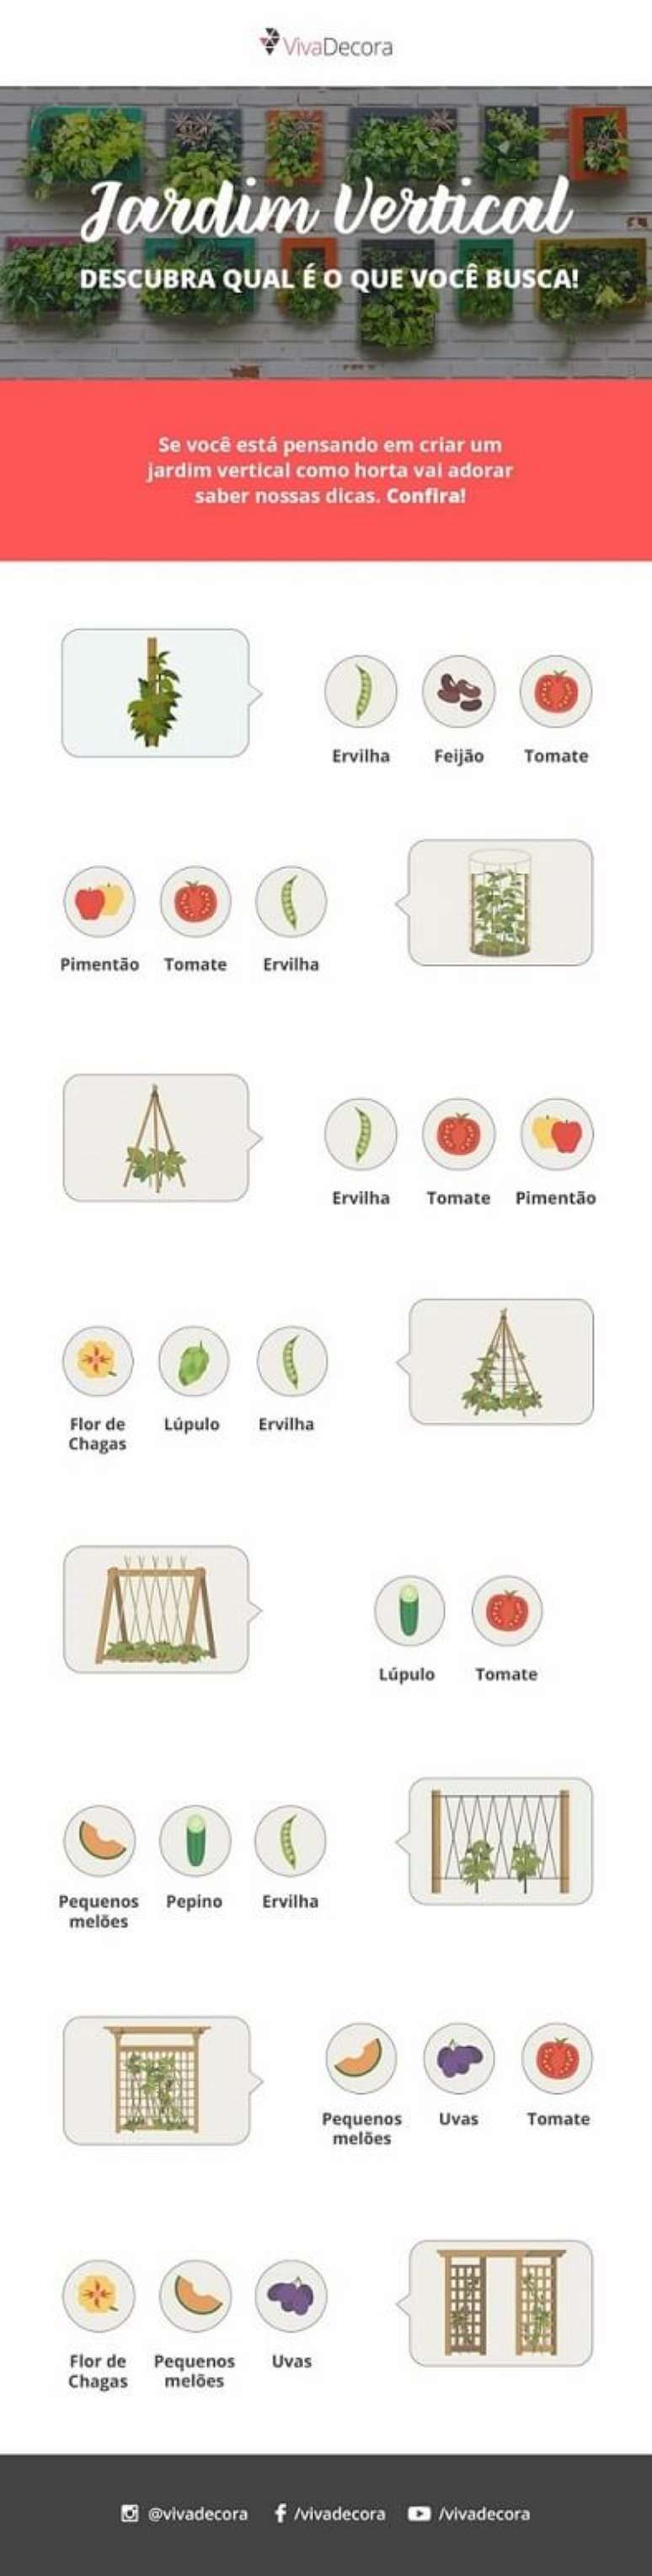 15. Infográfico – Dicas de plantas para horta vertical